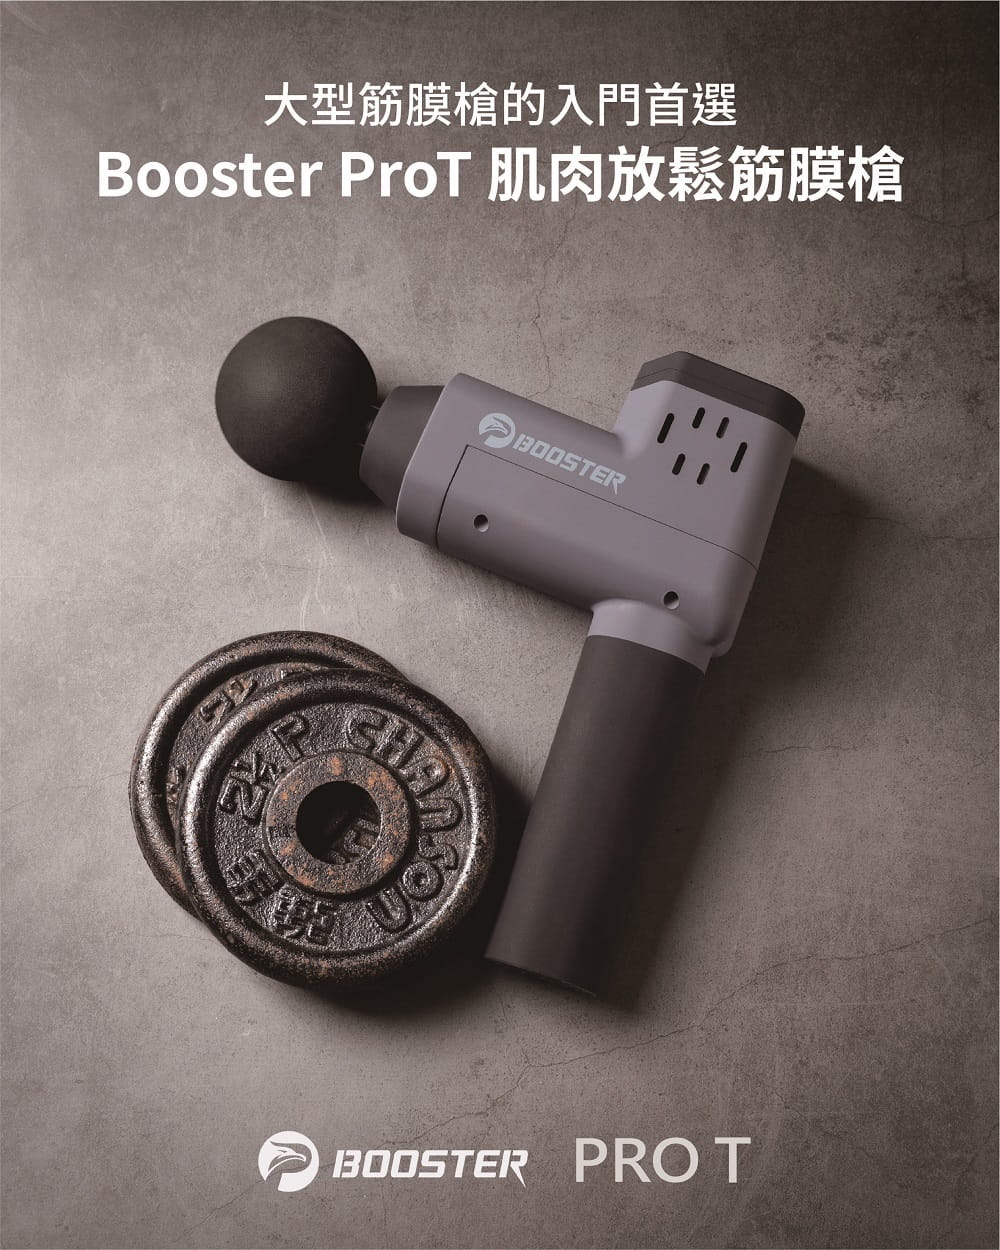 【Project Mars】【火星計畫】Booster ProT 肌肉放鬆筋膜槍 1